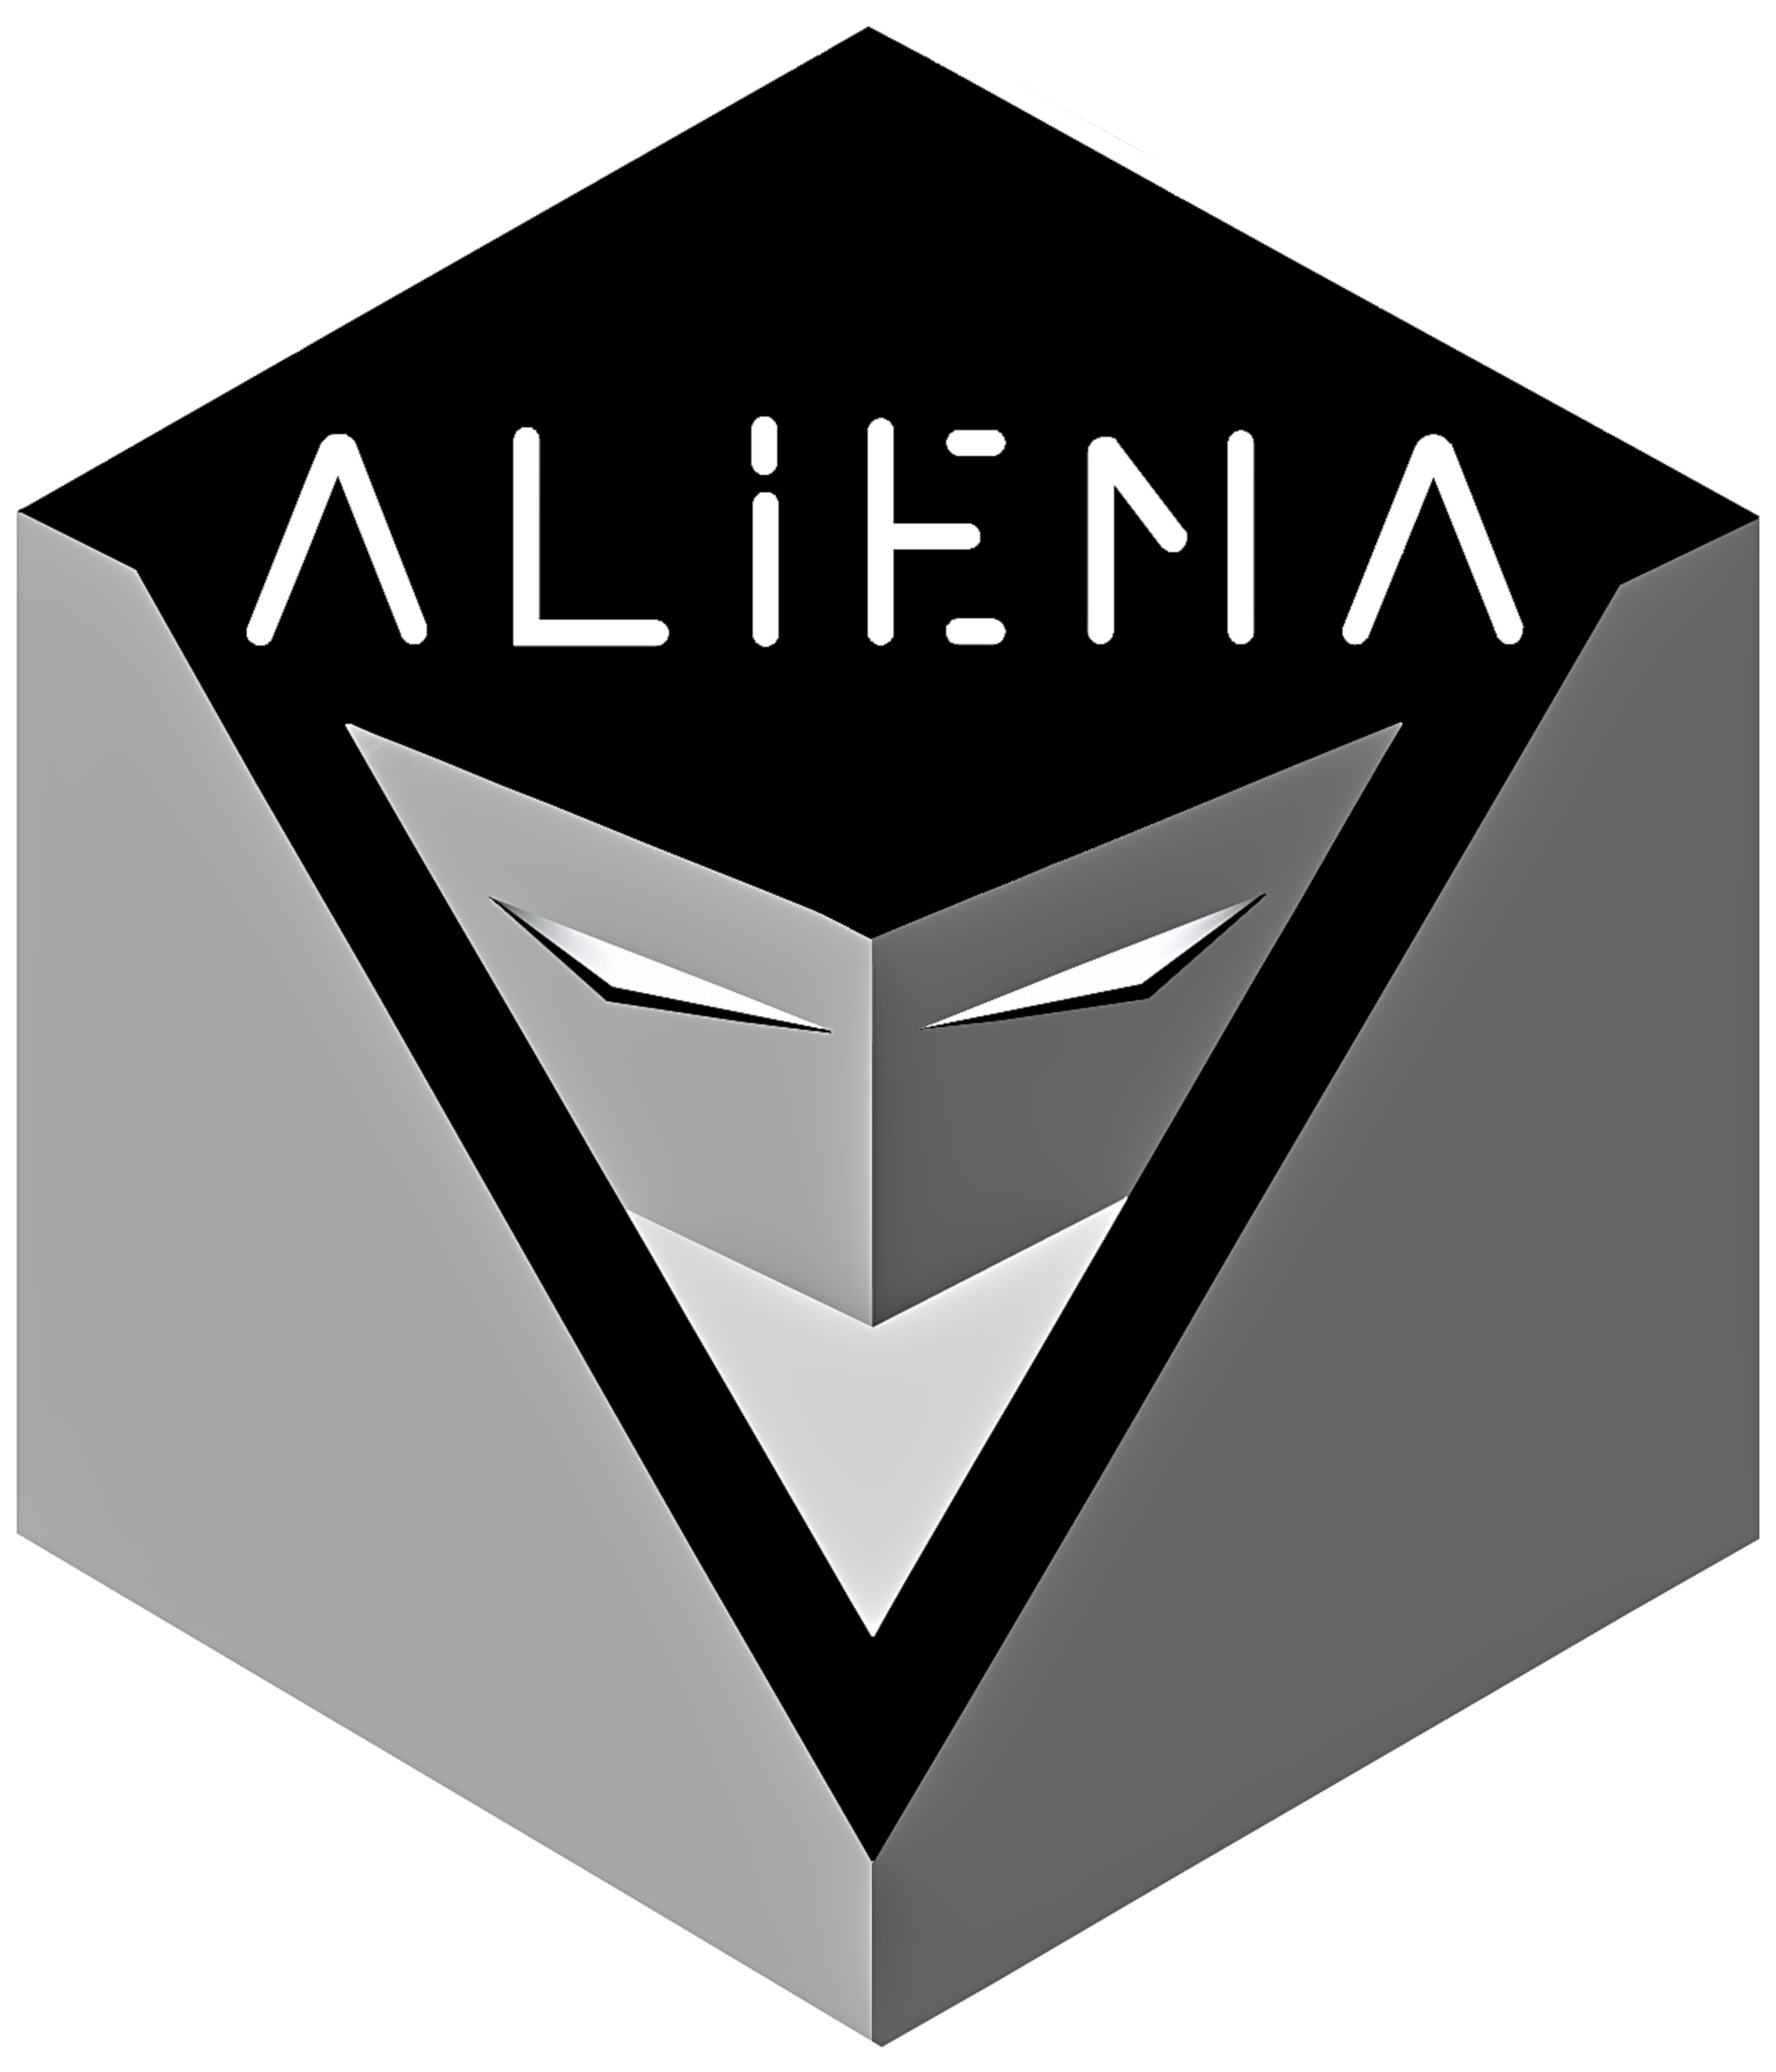 Aliena logo